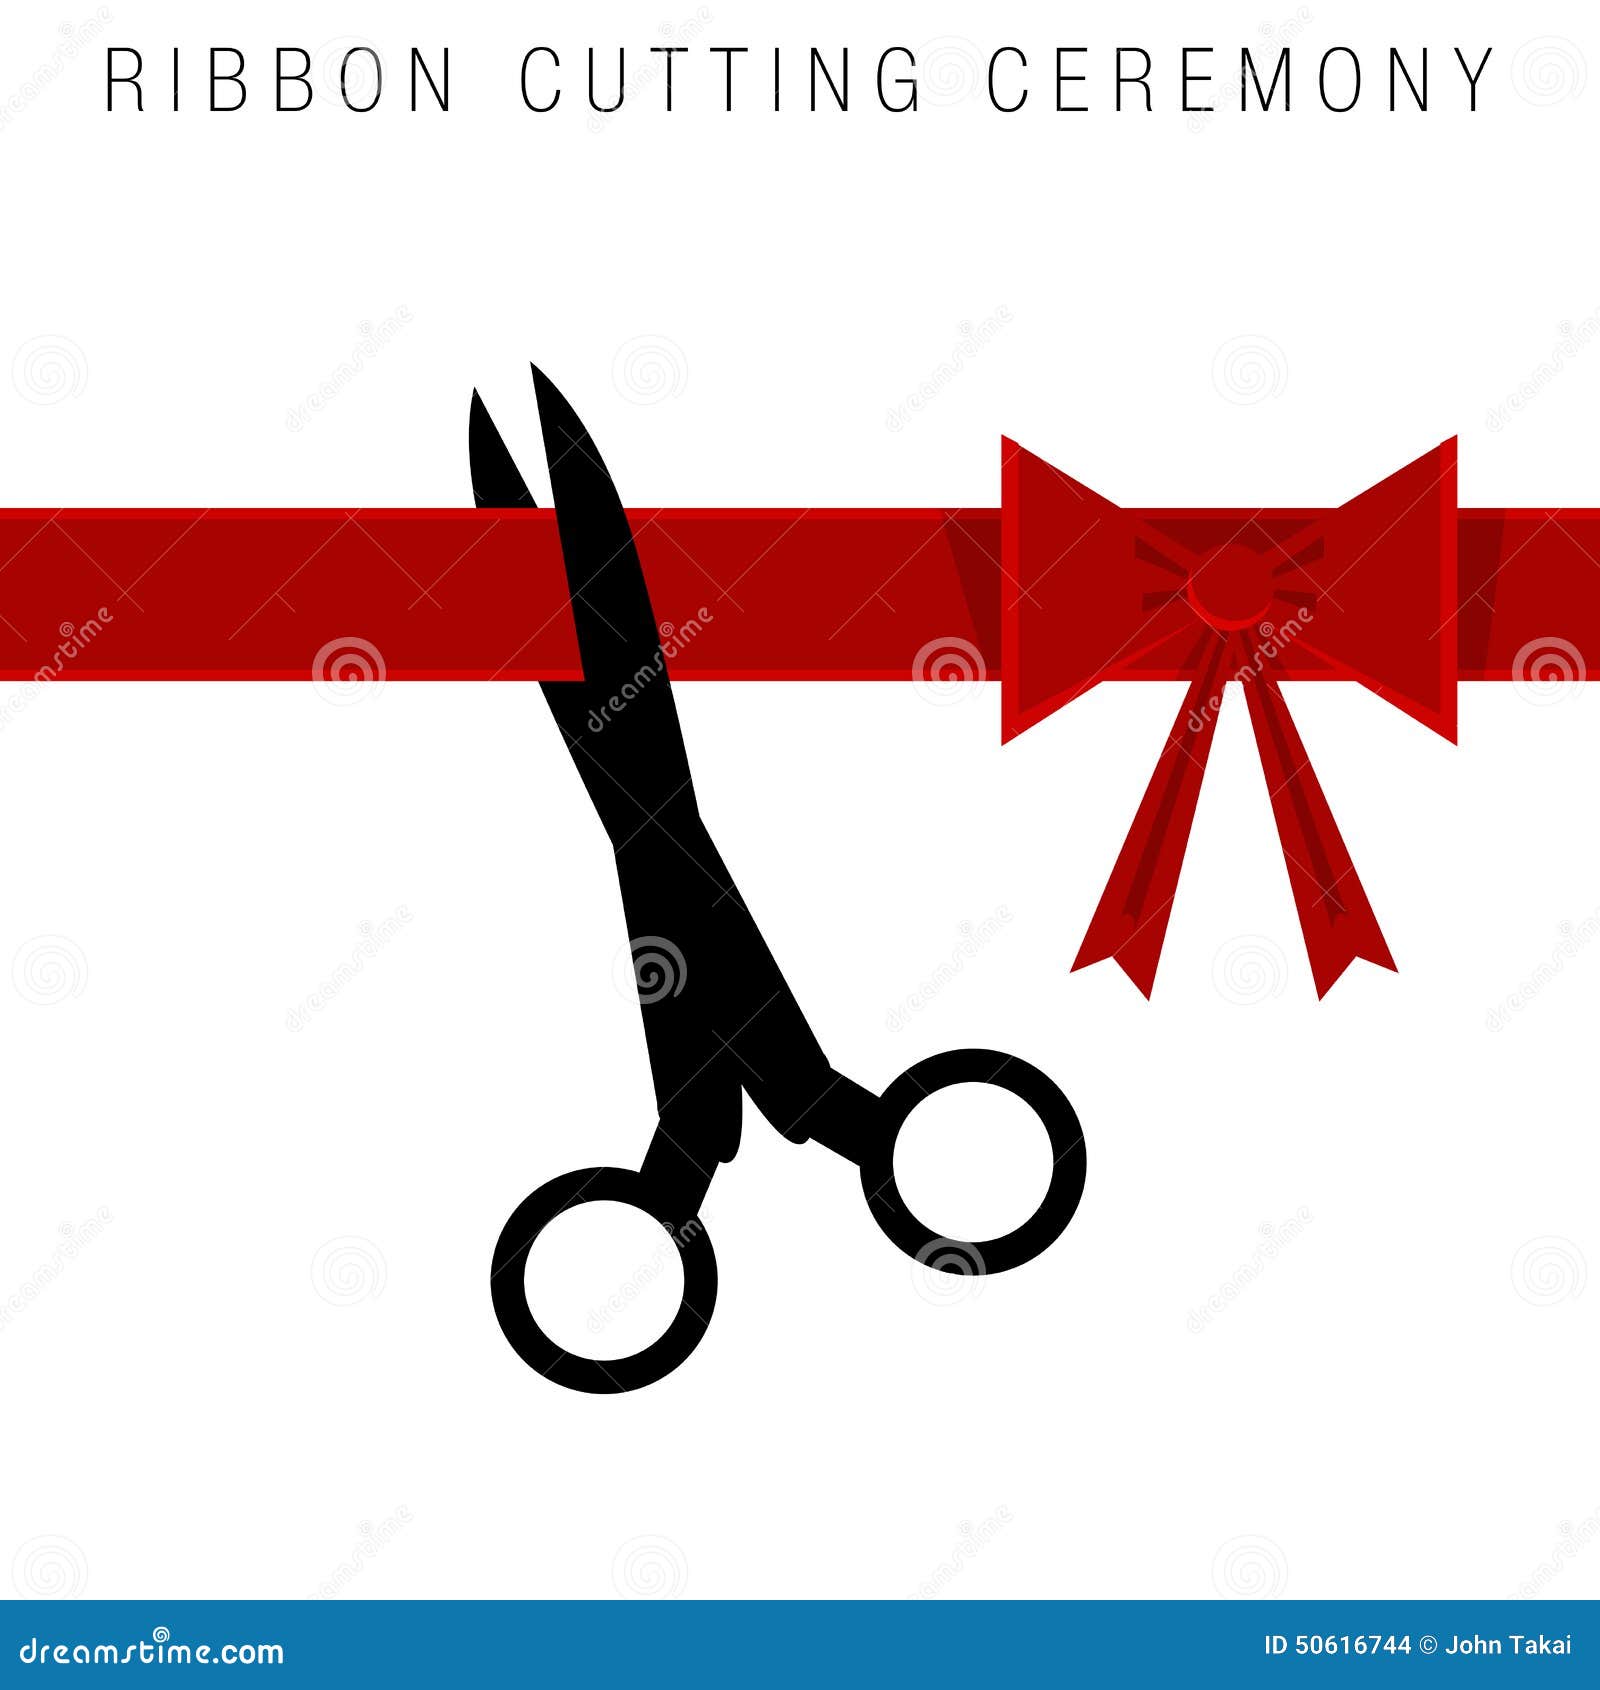 1,100+ Cutting Ribbon Ceremony Stock Illustrations, Royalty-Free